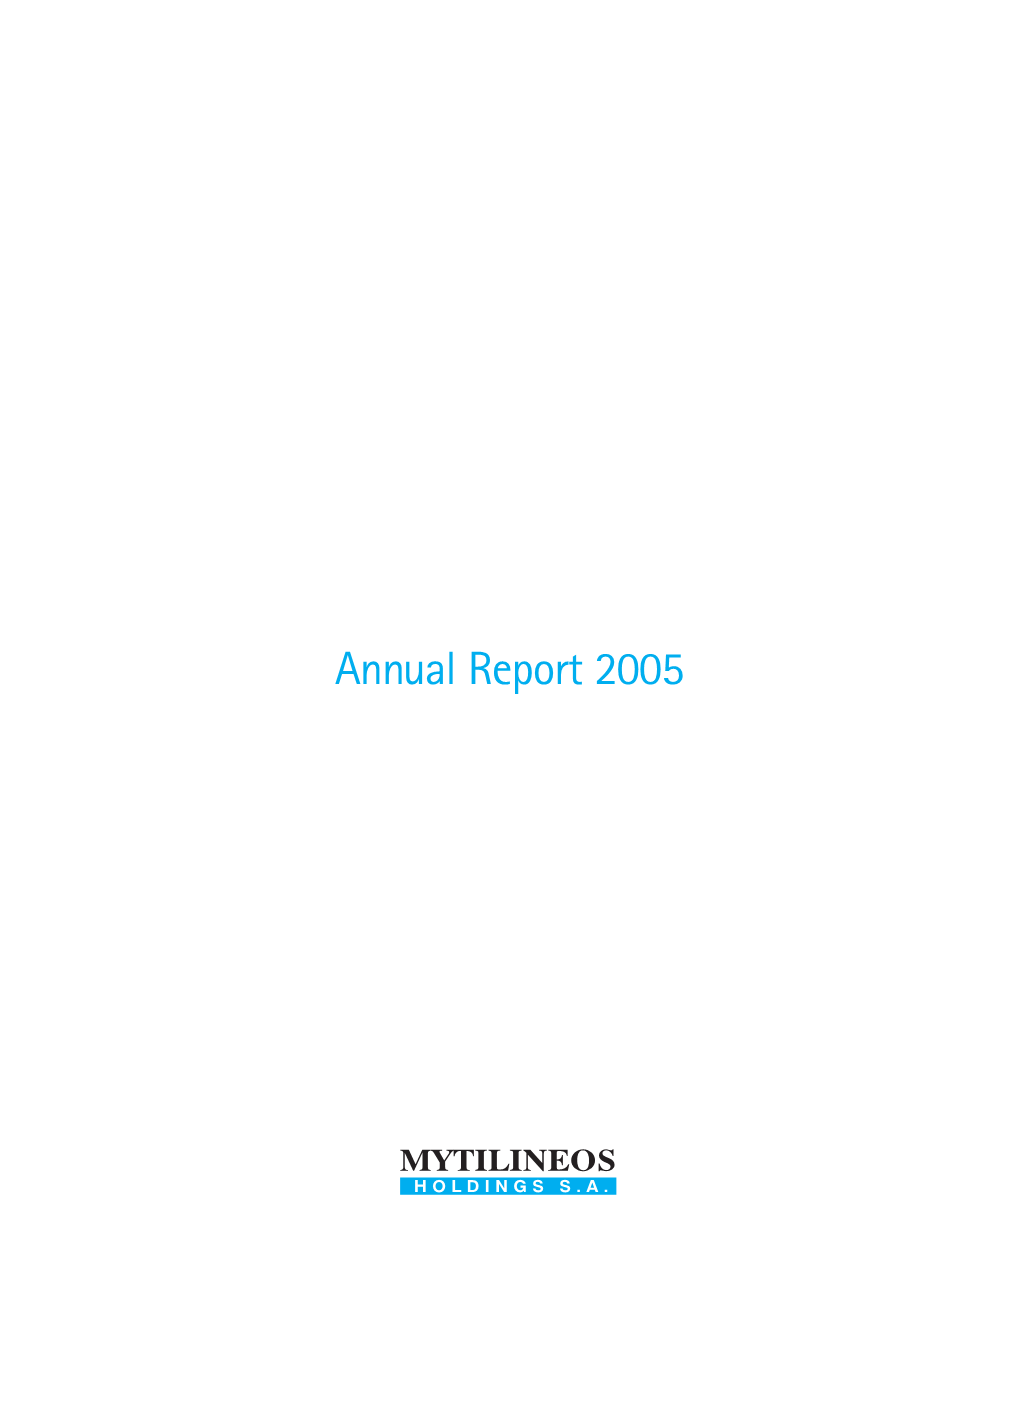 2005 Annual Report PDF 973.6KB